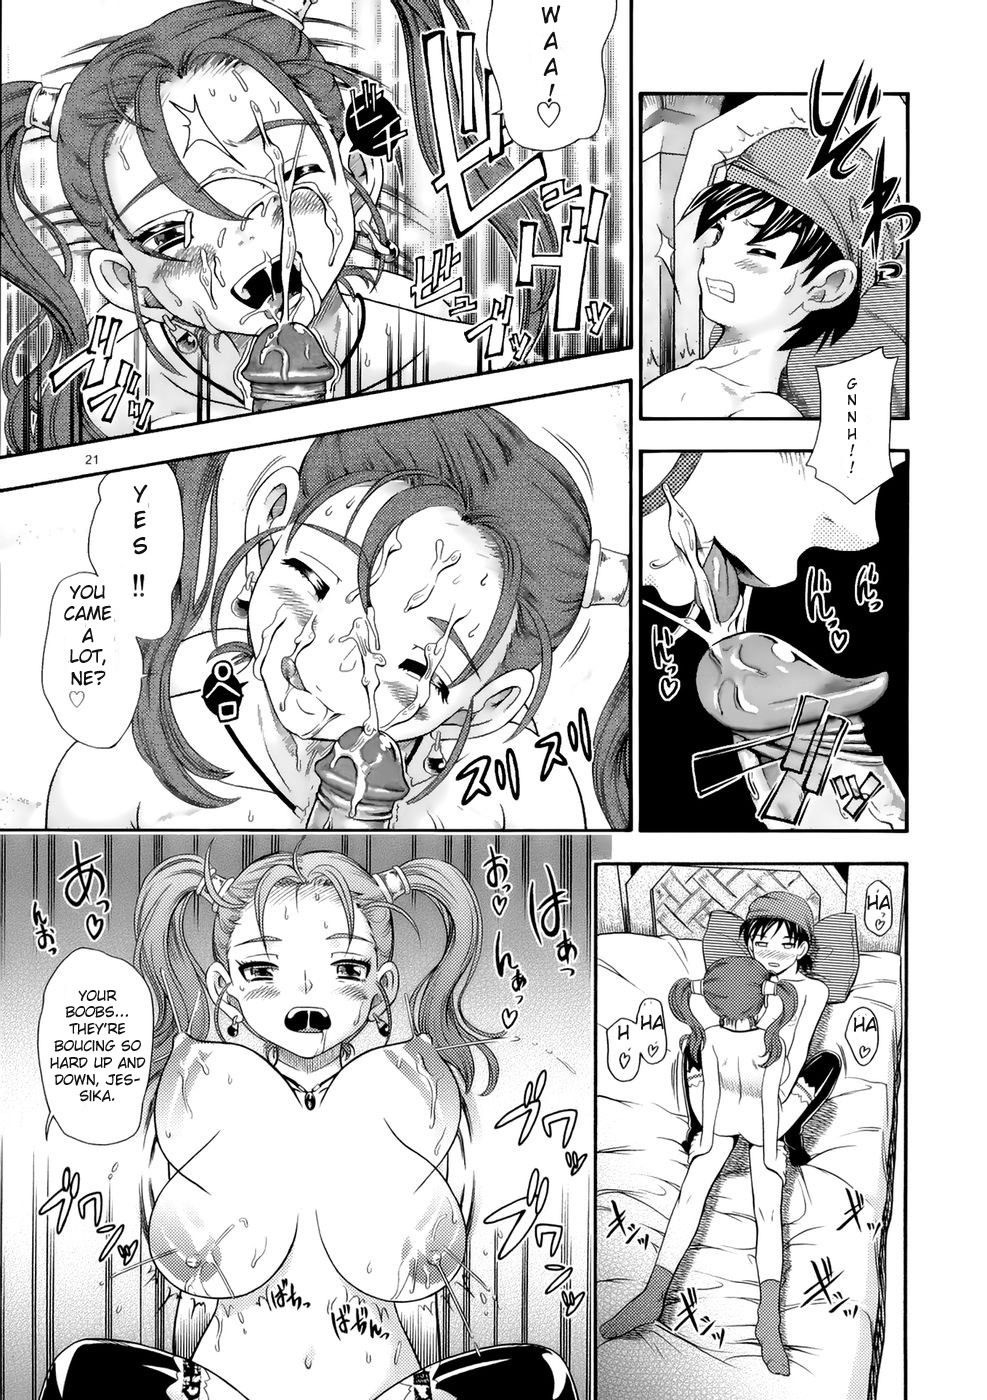 Jessica Milk 8.0 dragon quest viii 19 hentai manga